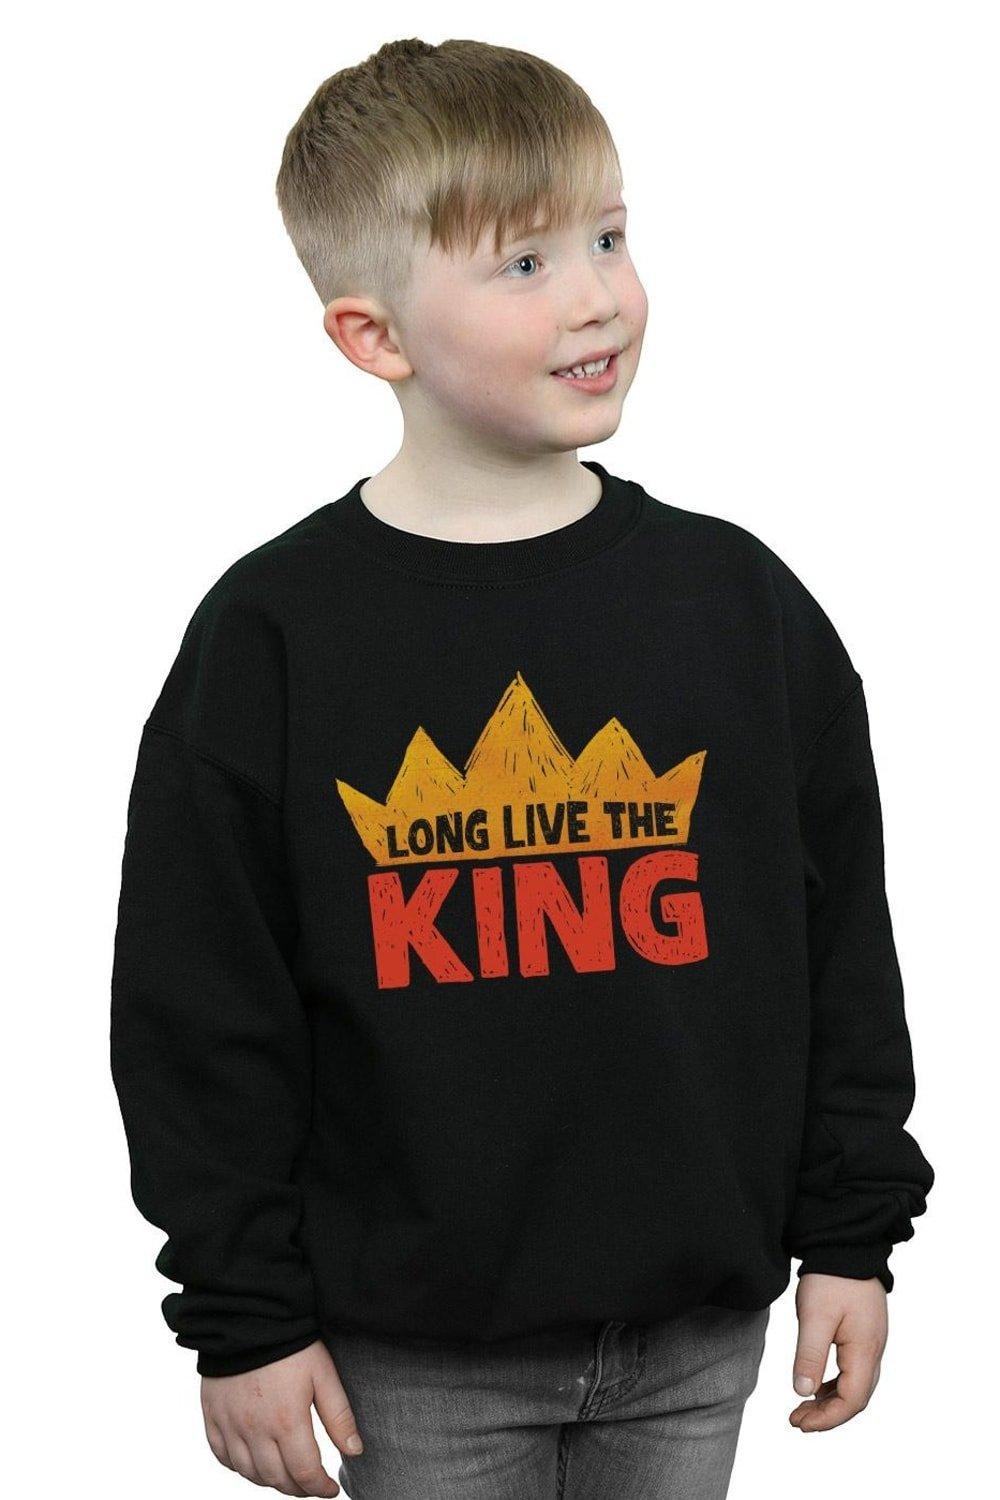 The Lion King Movie Long Live The King Sweatshirt